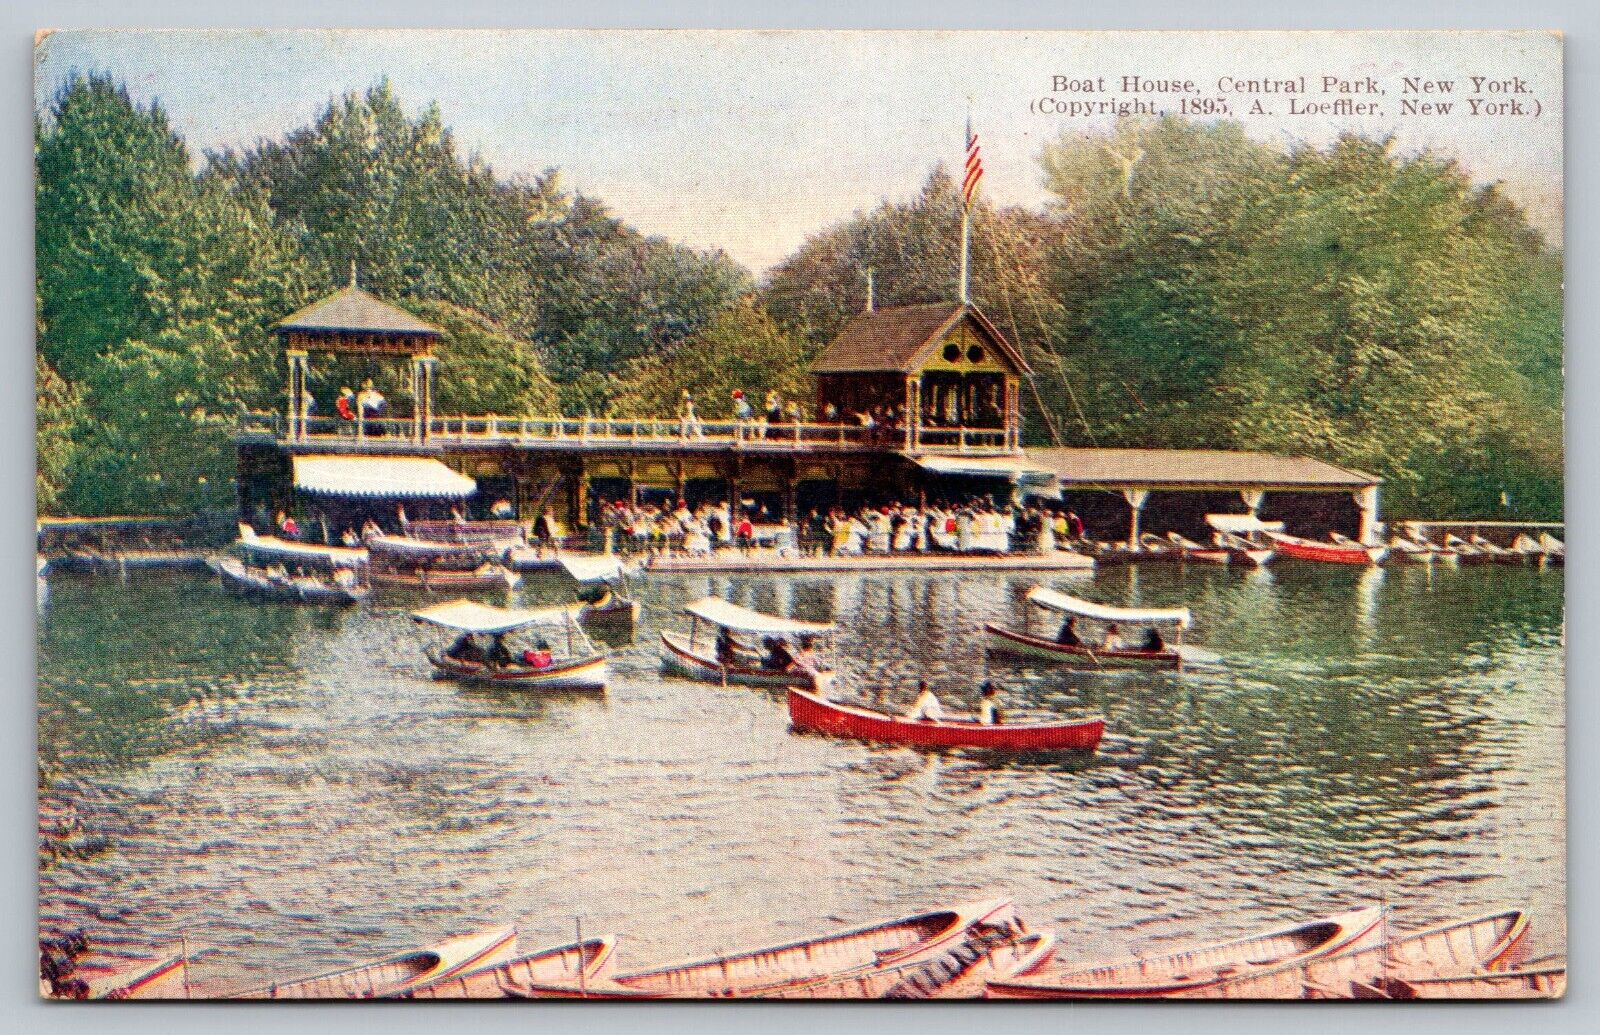  Boat House, Central Park, New York City, NY Vintage Postcard